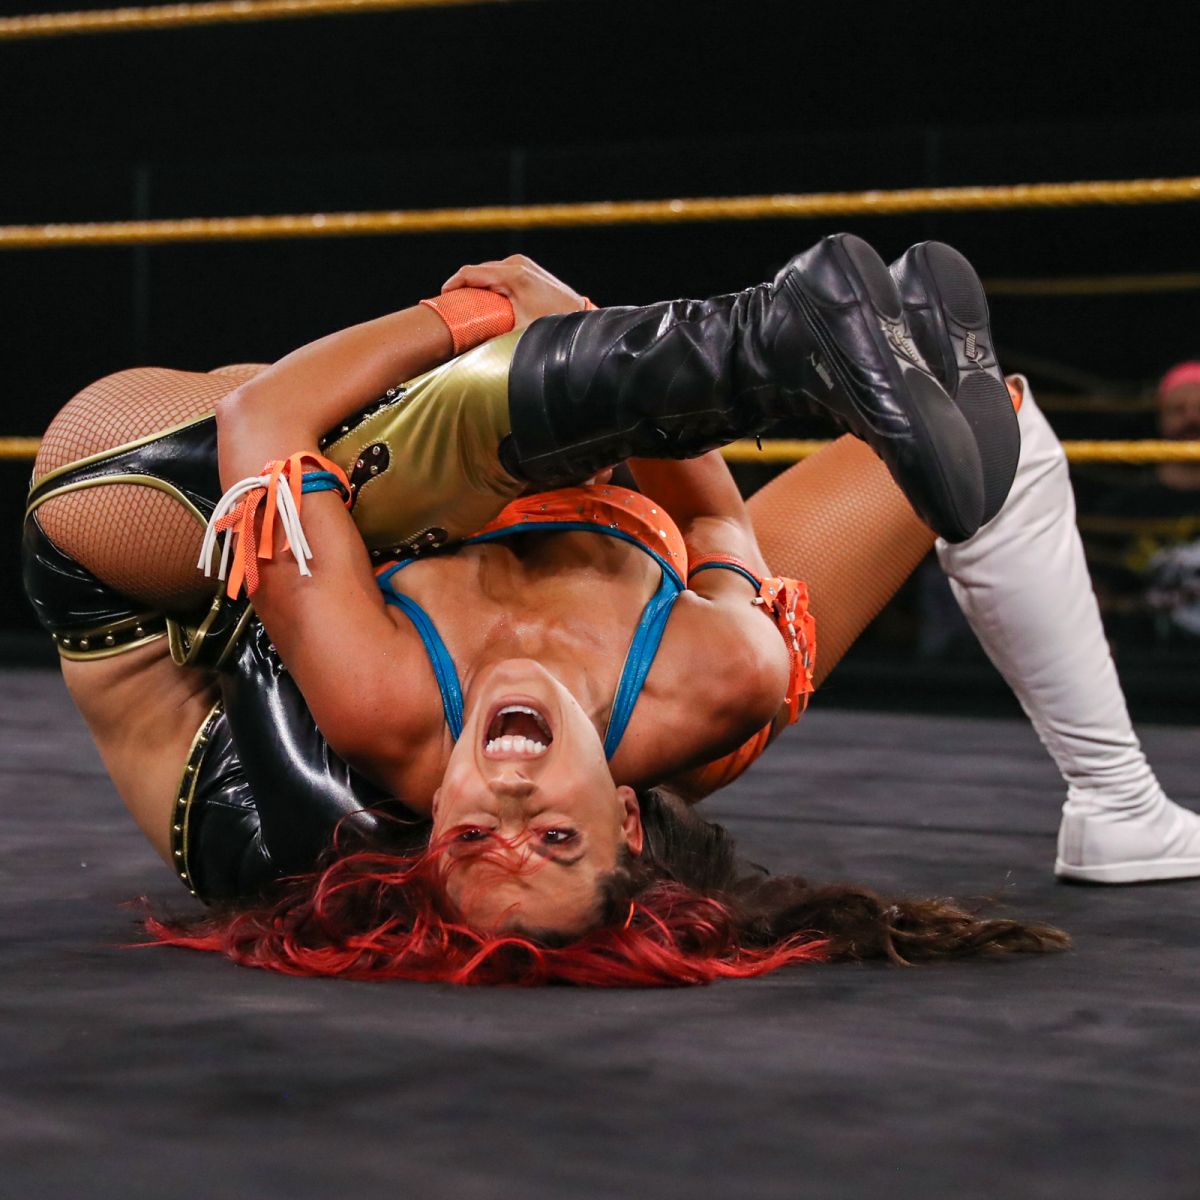 Santana Garrett vs. Aliyah | WWE NXT 2020/06/03